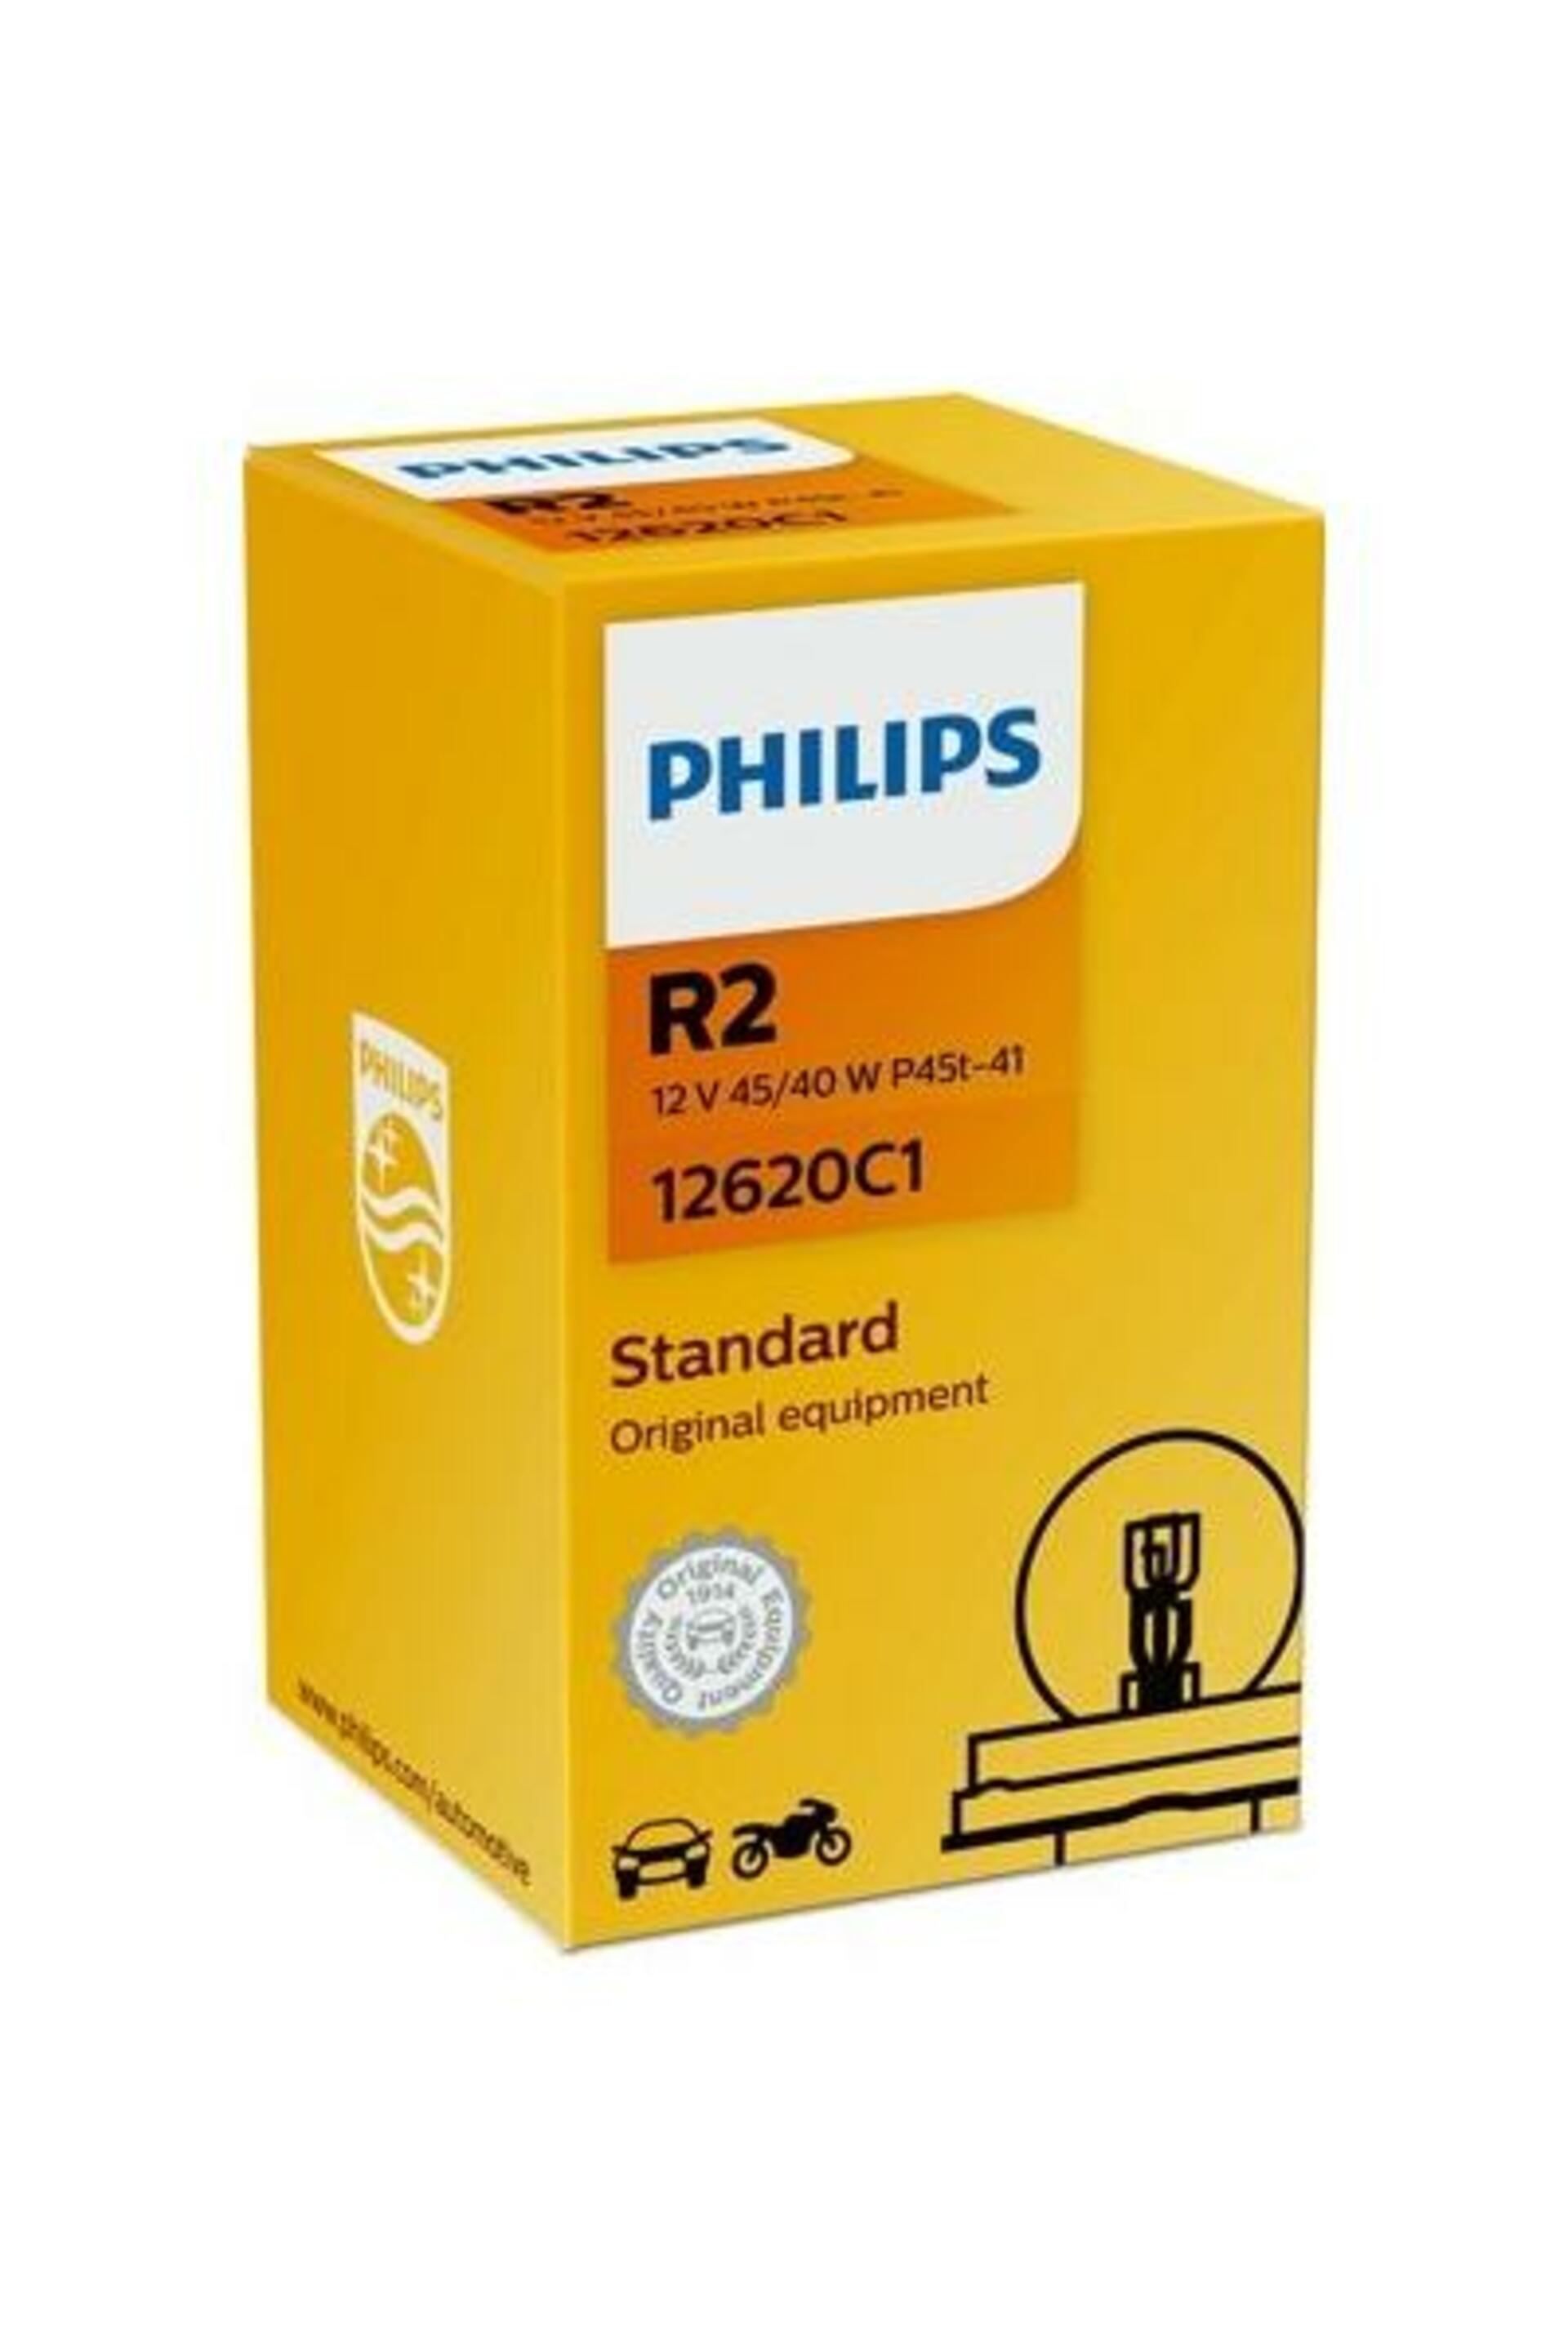 Philips R2 12V 45/40W P45t-41 1ks 12620C1